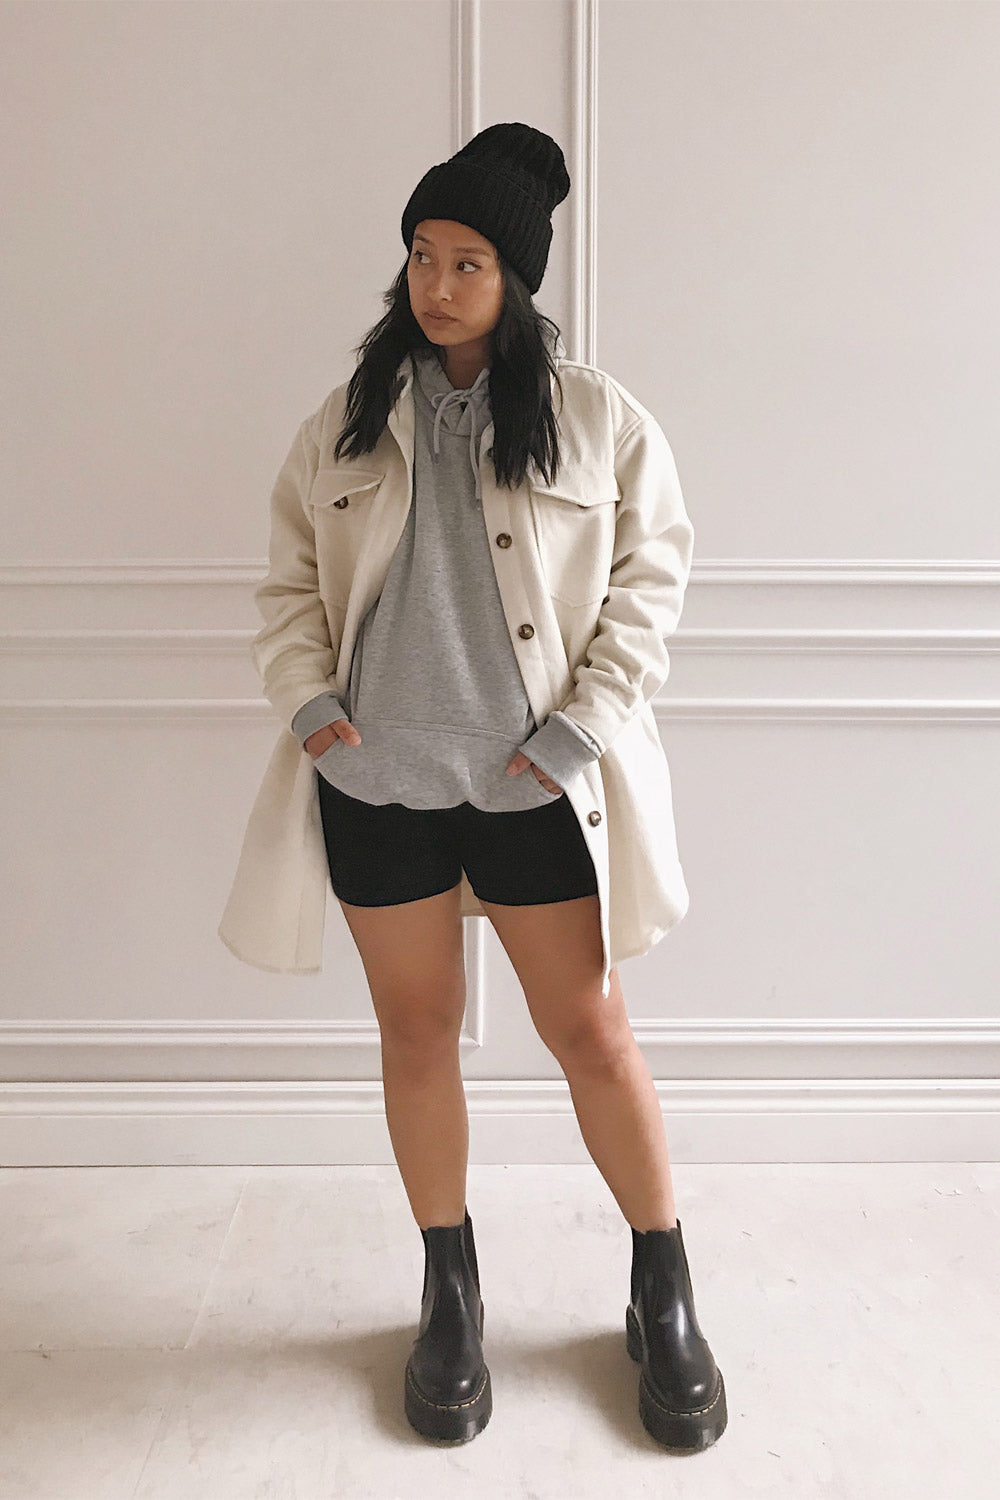 Juxue Rock Grey Oversized Hoodie | La petite garçonne  model outfit